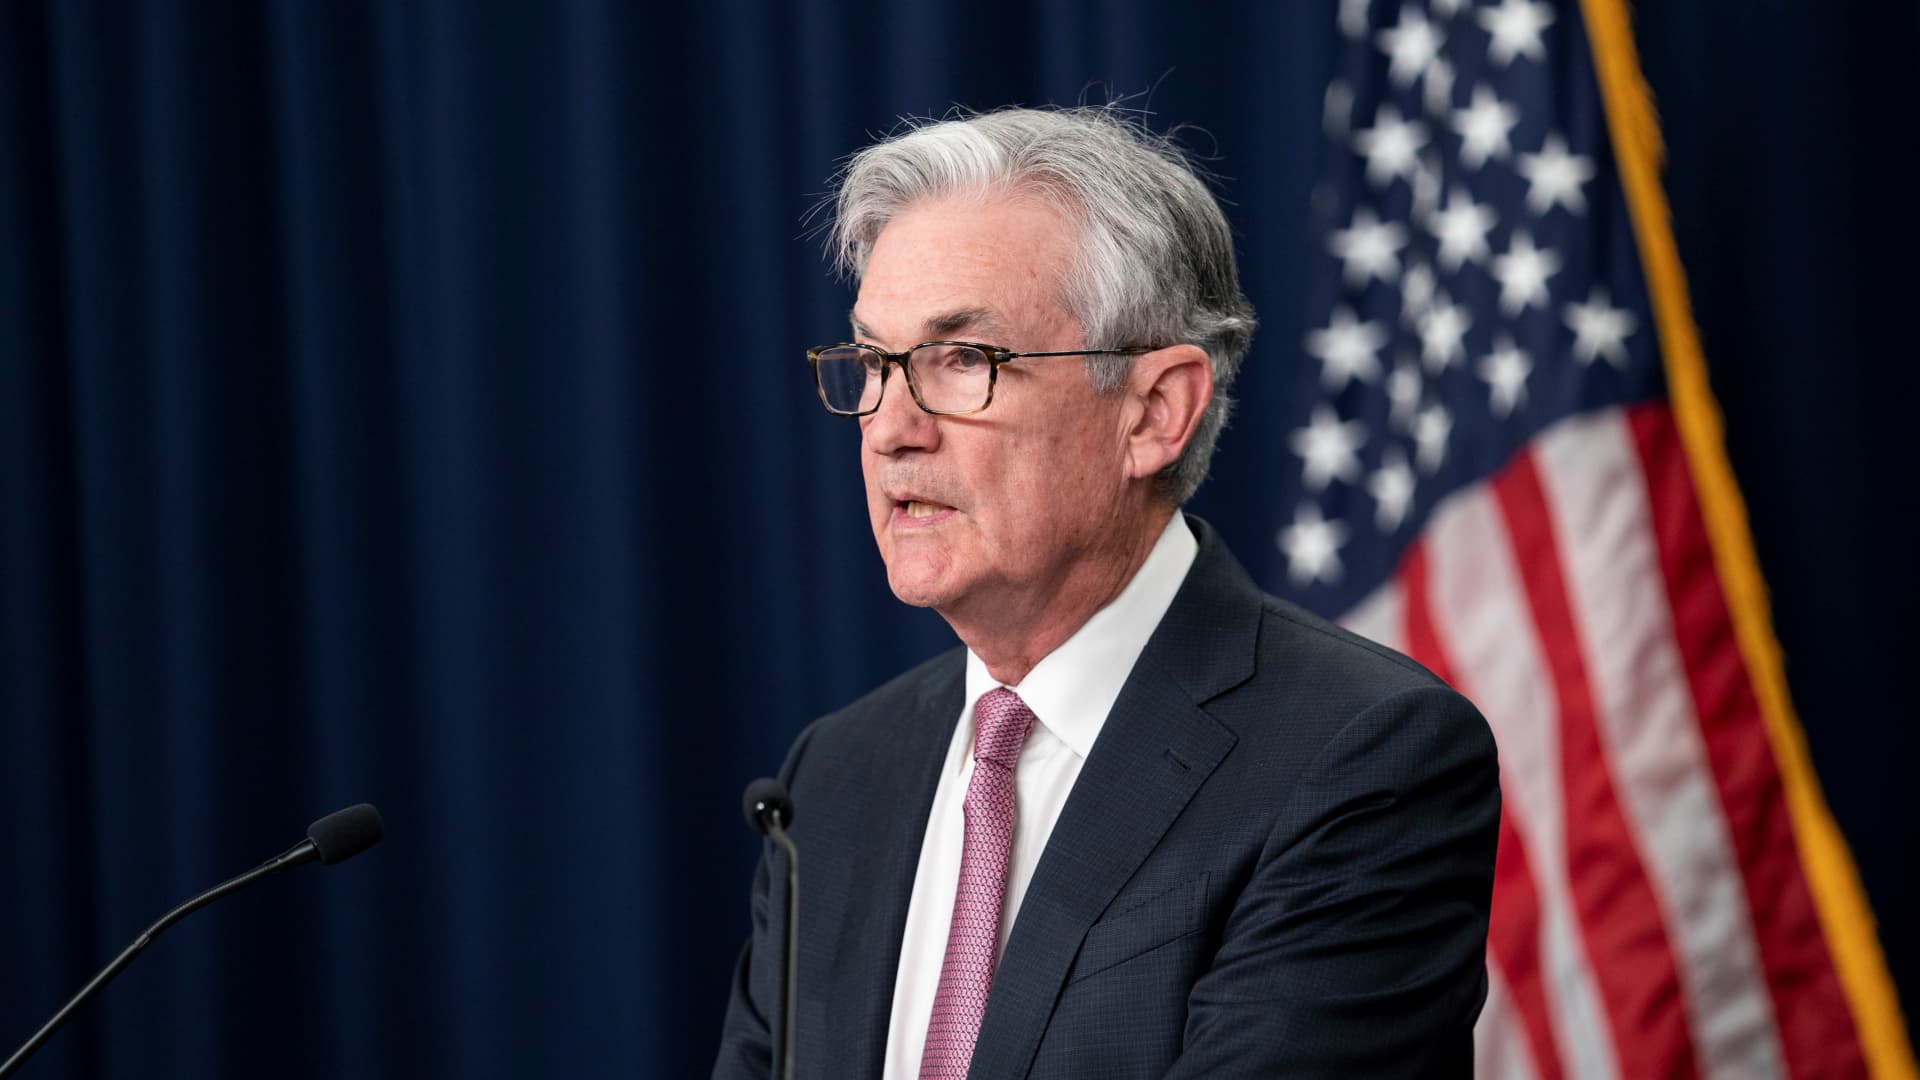 10-year Treasury yield climbs as investors await economic data, clues on monetary policy